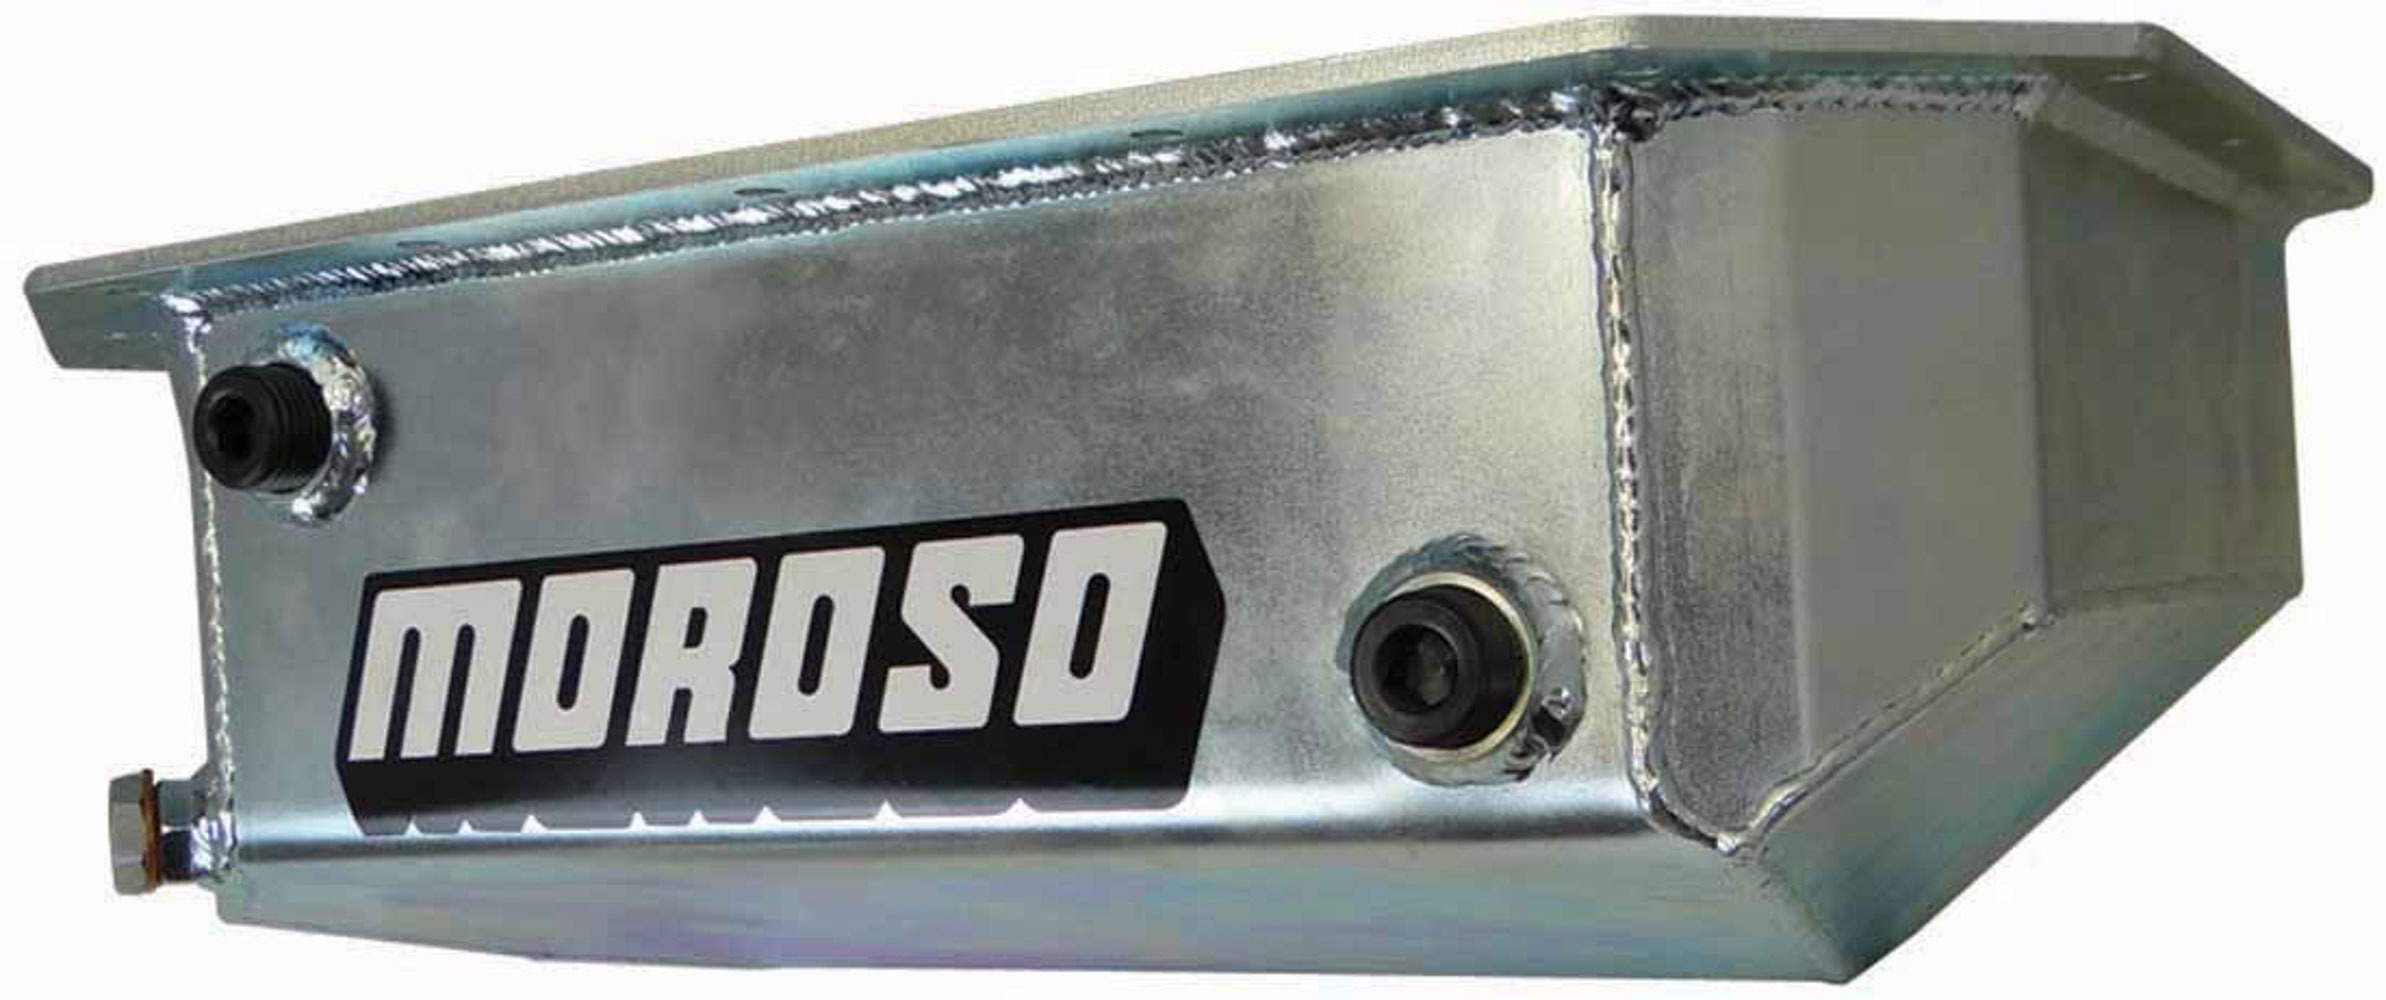 Moroso 20919 Engine Oil Pan, Street / Strip, Driver Side Sump, 5.5 qt, 5.500 in Deep, Baffled, Steel, Zinc Oxide, Honda K-Series, Each